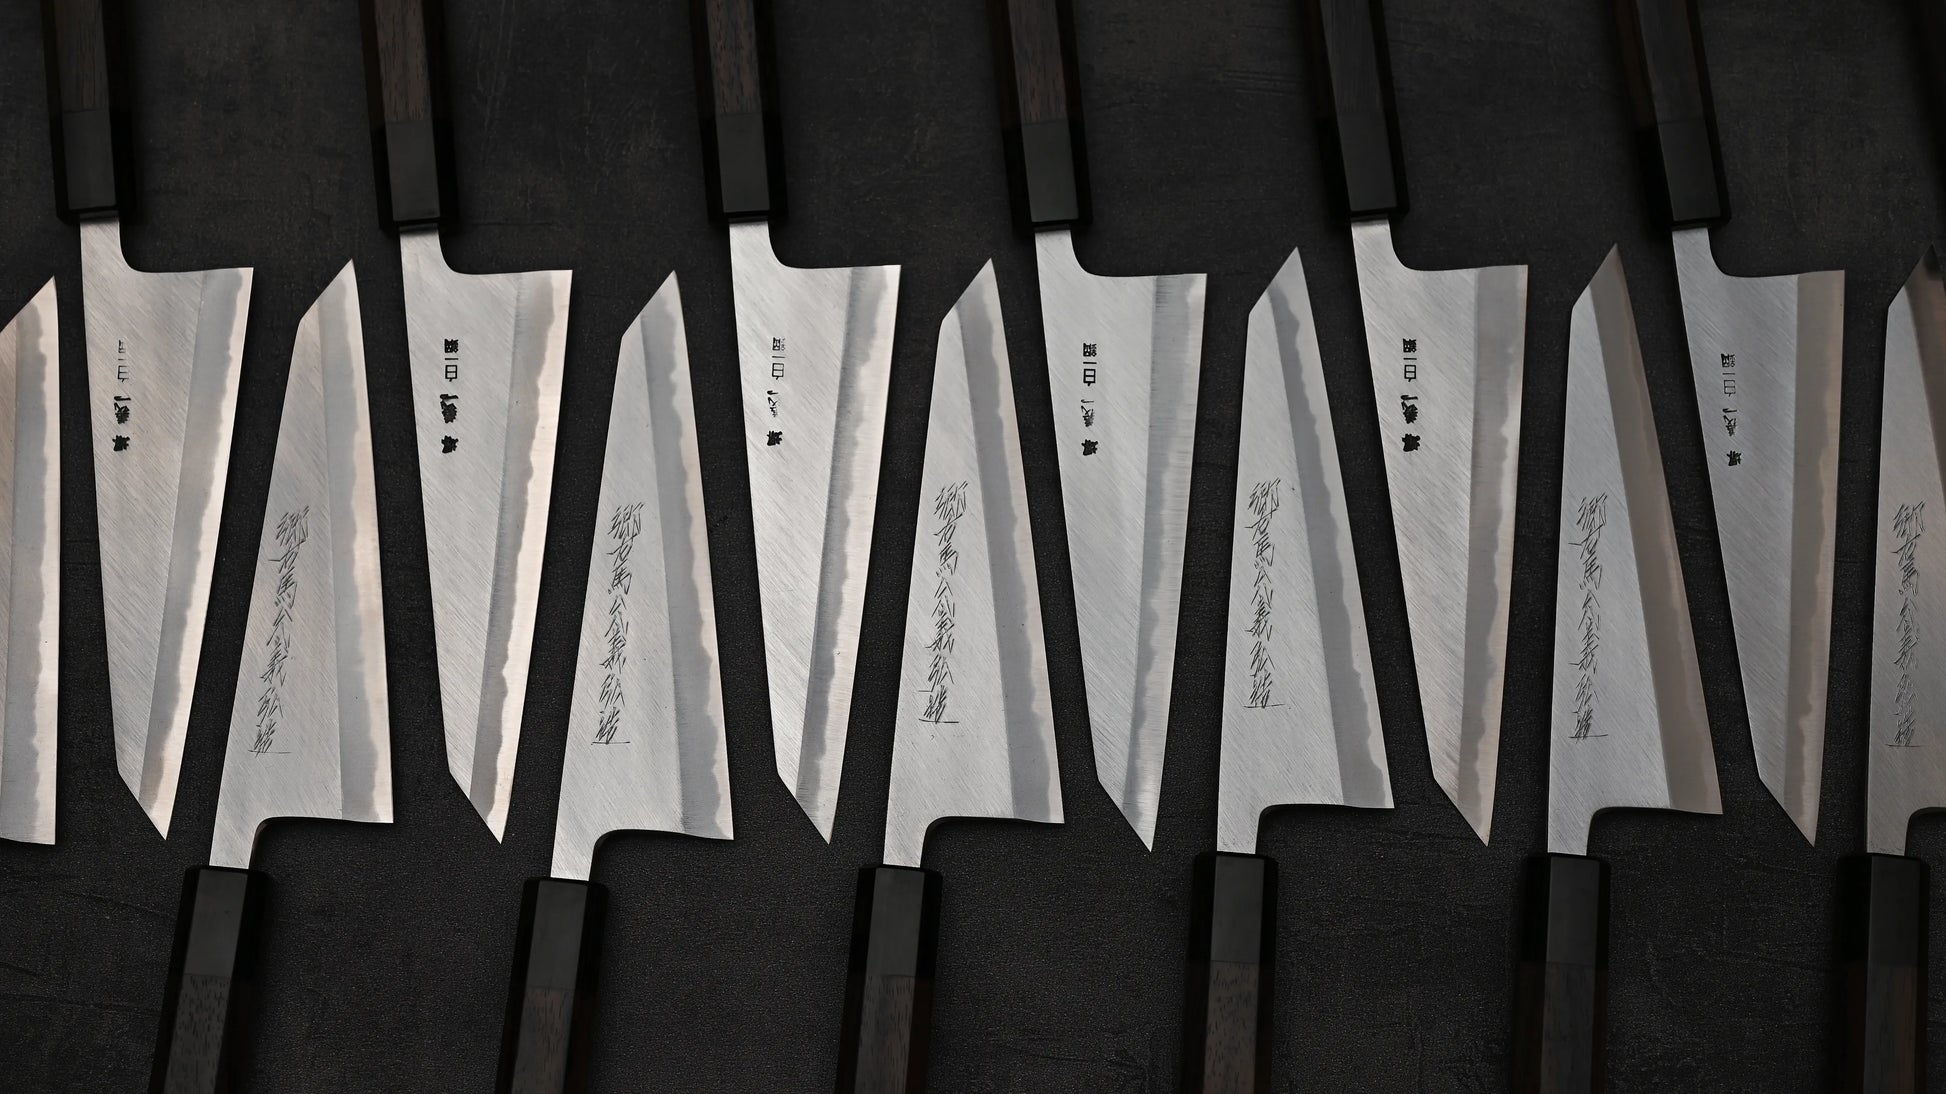 An array of Yoshikazu Tanaka shirogami#1 double bevel honesuki knives in alternating positions